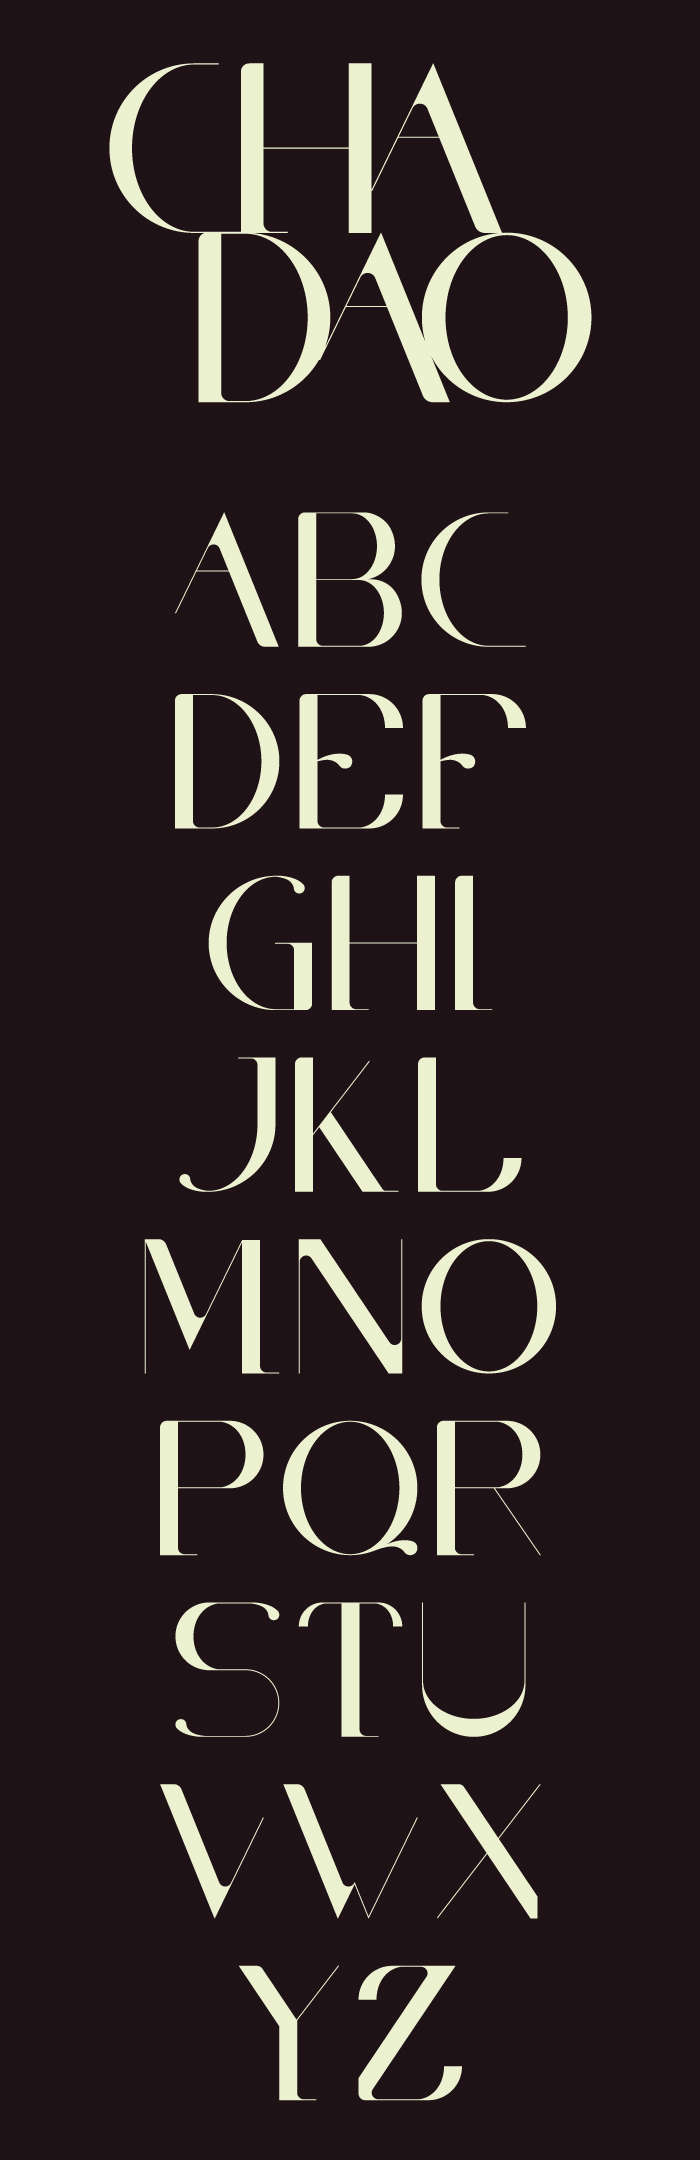 Cha Dao, typography